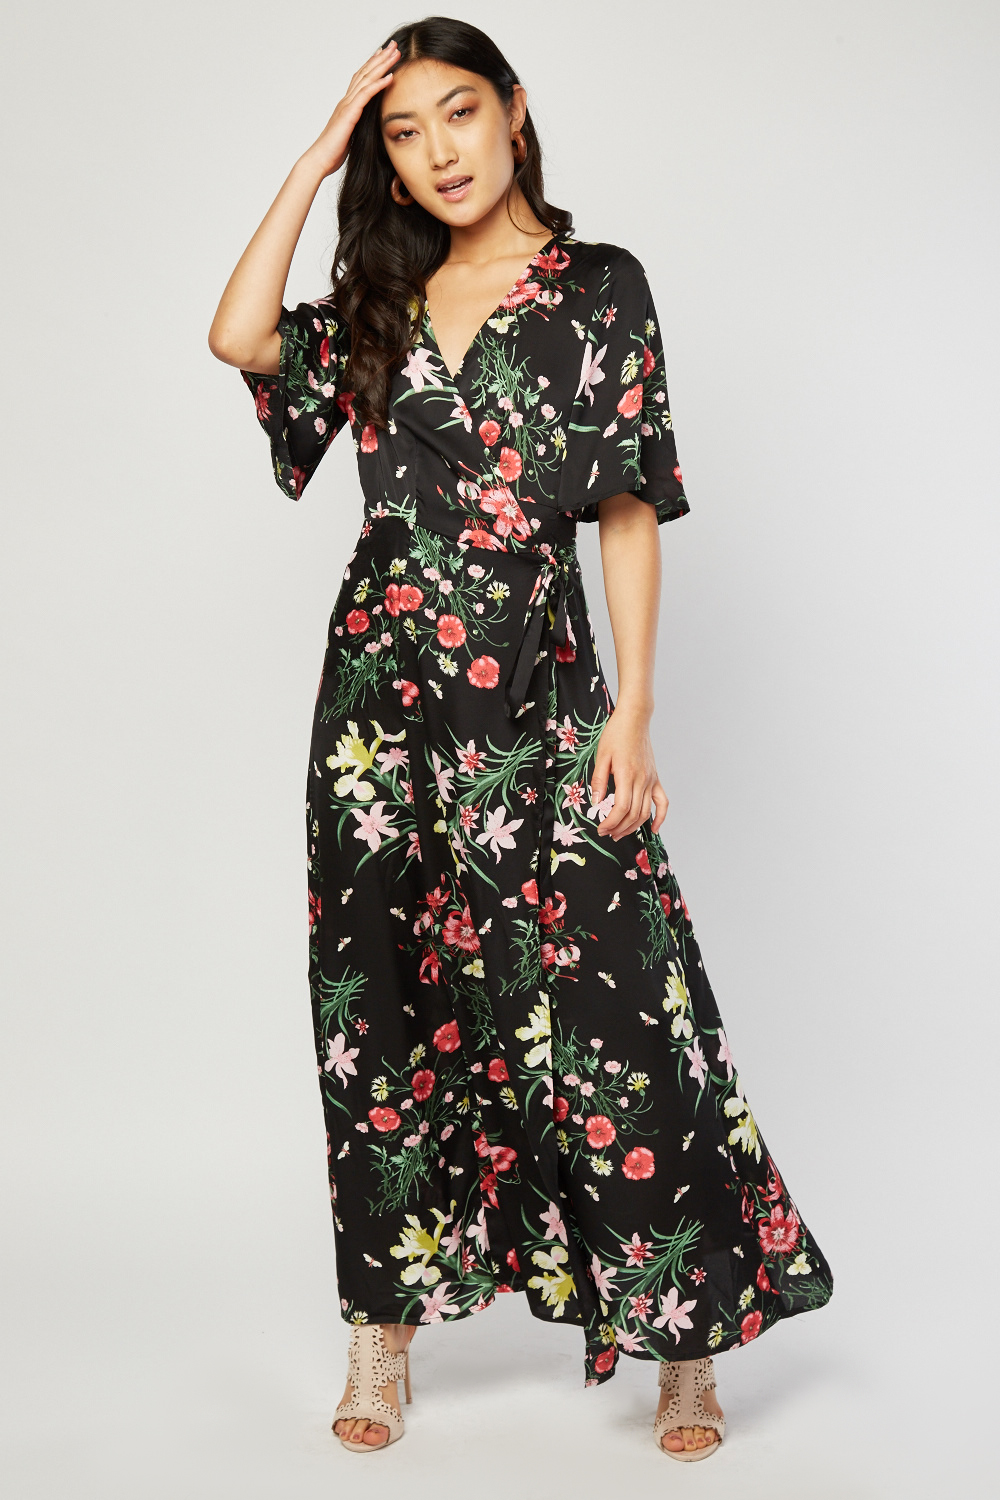 Floral Maxi Wrap Dress - Just $6